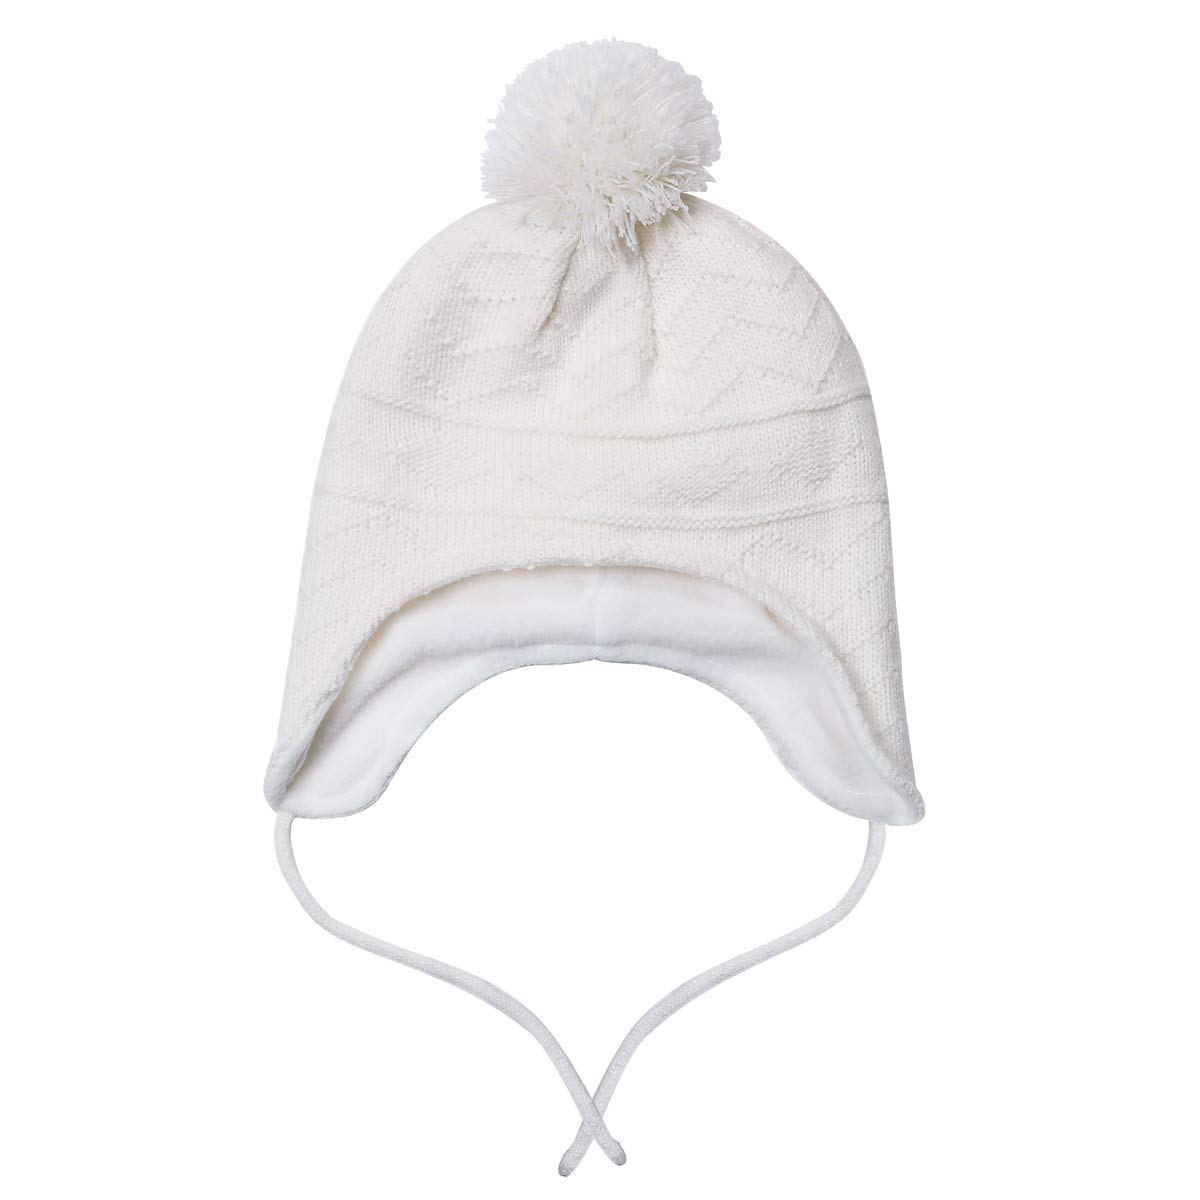 Kids Hats and Gloves Set Girls Toddler Baby Winter Hat Mitten Knit Earflap Beanie Warm Fleece Cap